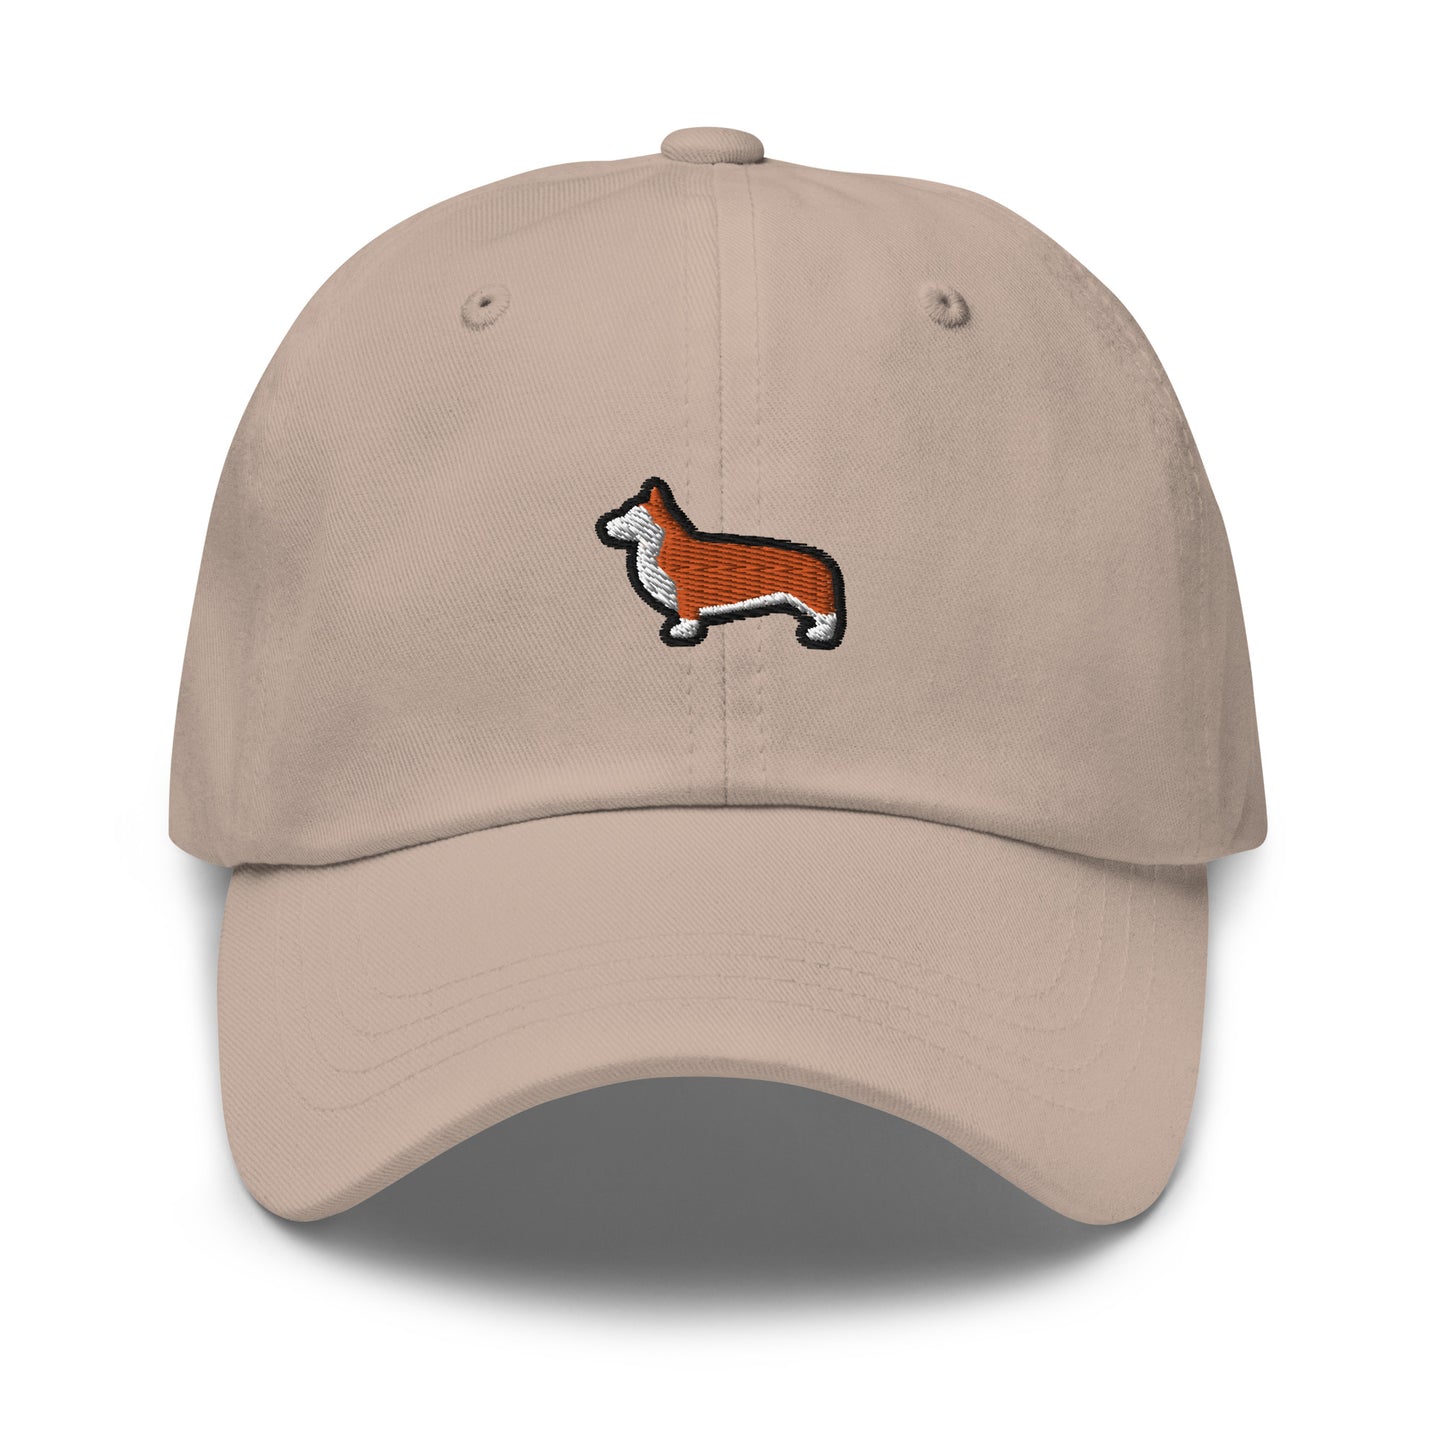 Corgi Dog Embroidered Baseball Cap